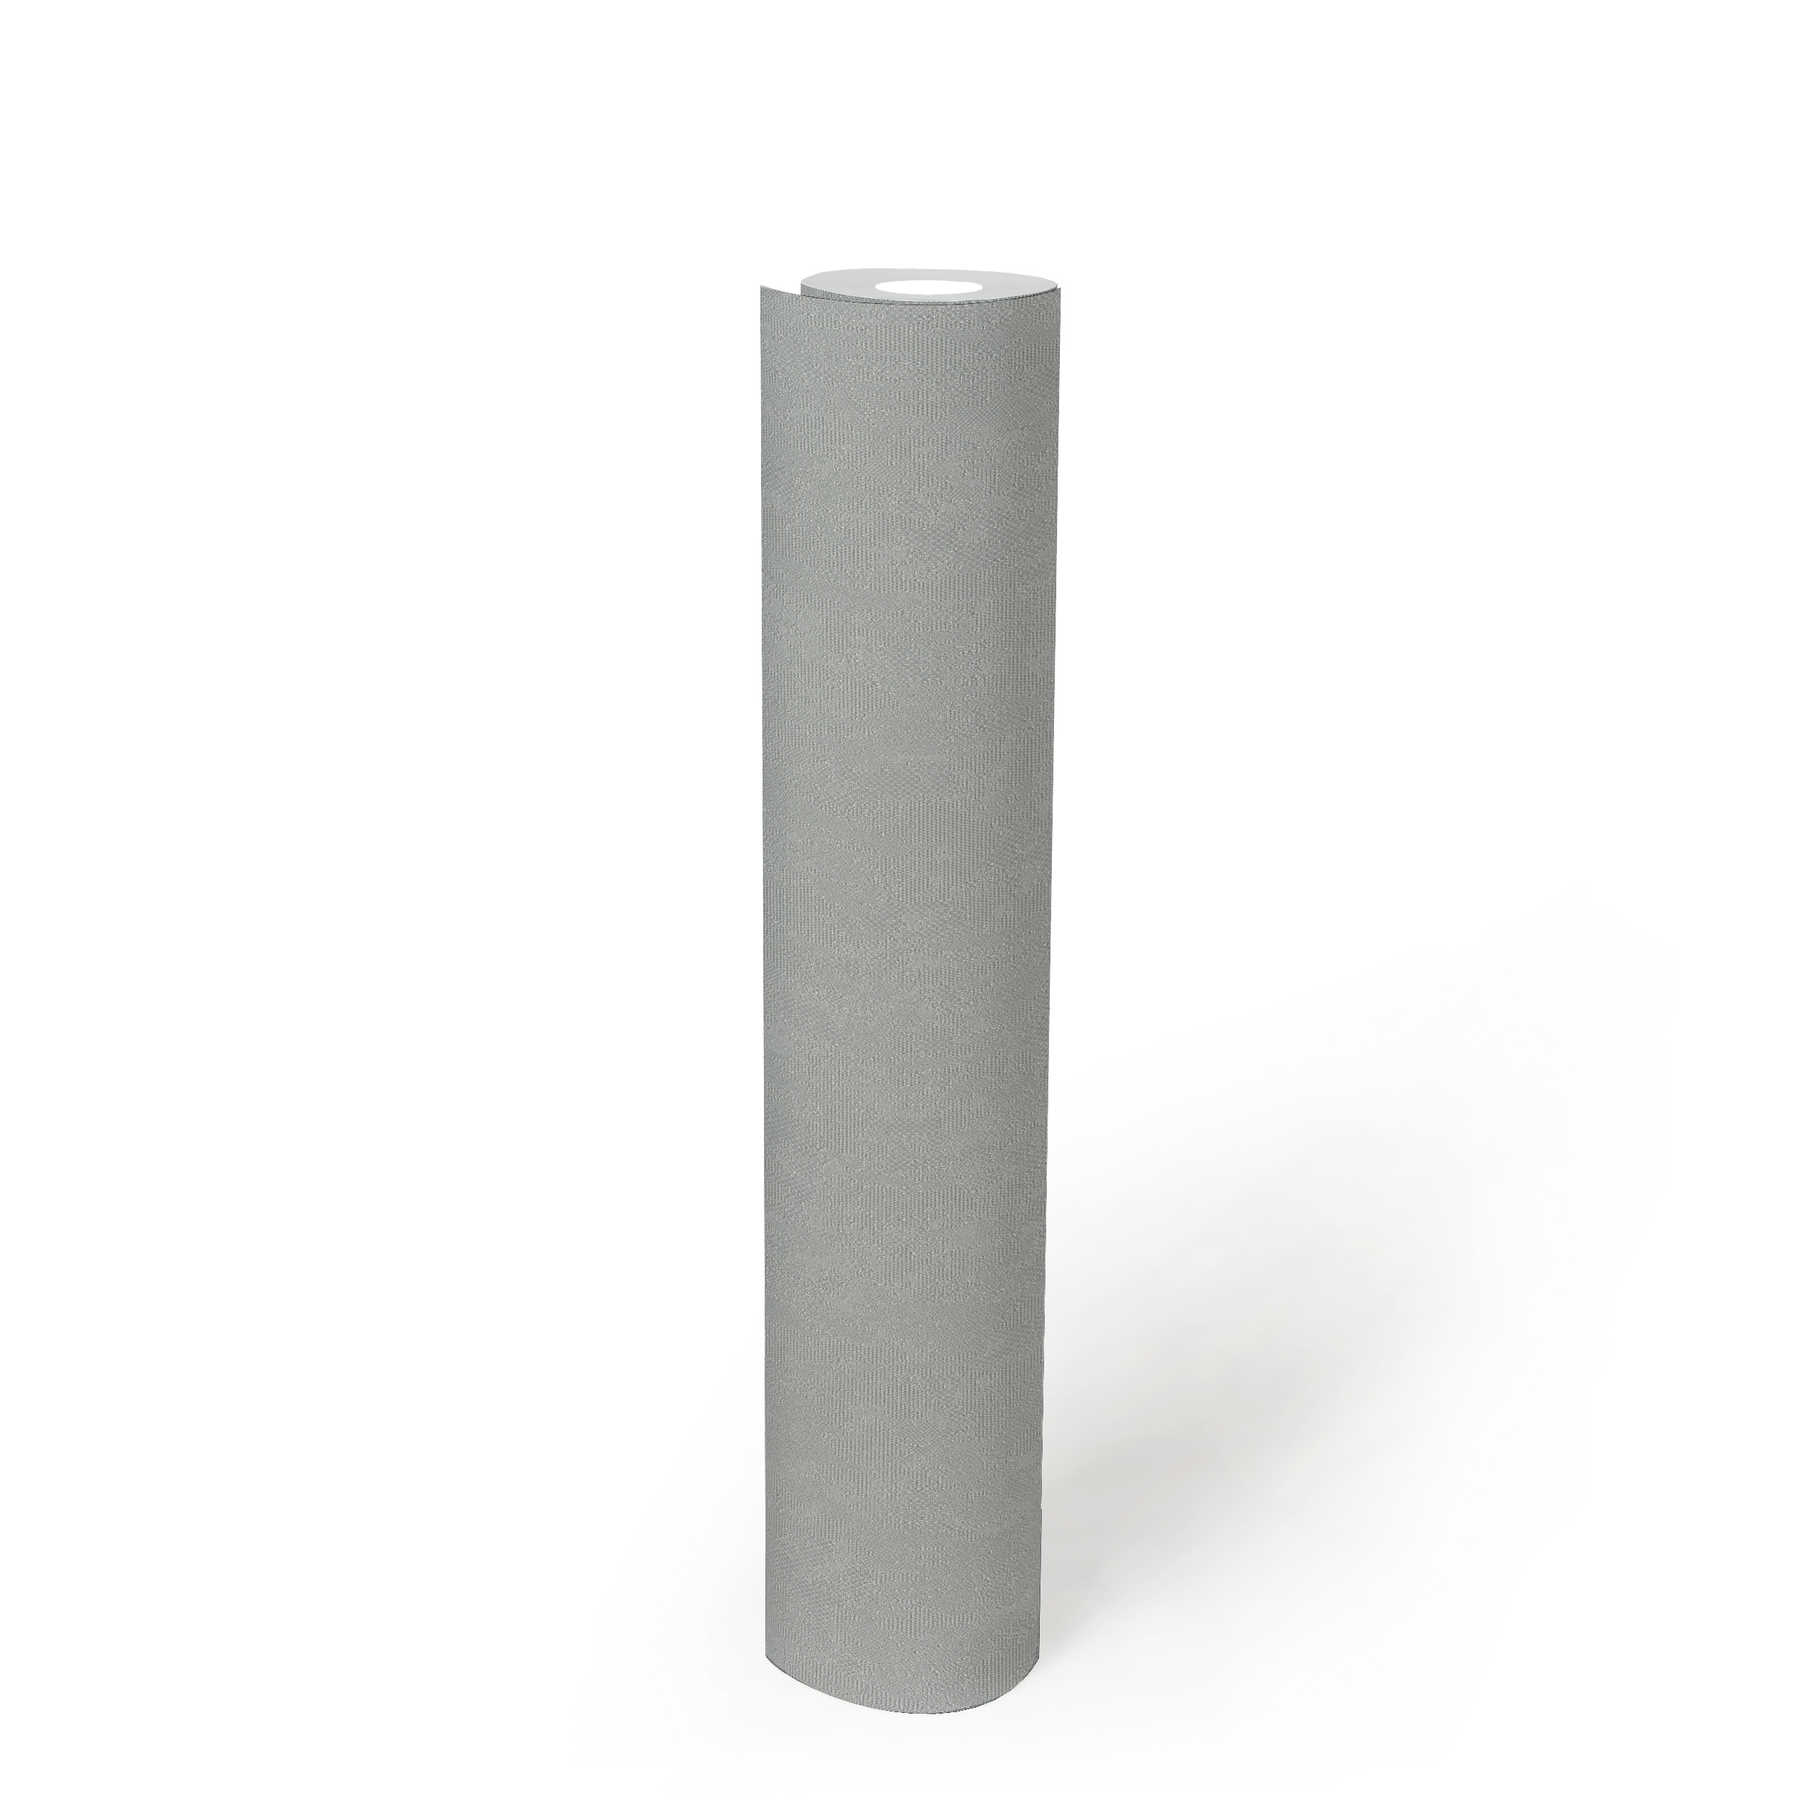             Einfarbige Tapete mit Struktureffekt – Grau
        